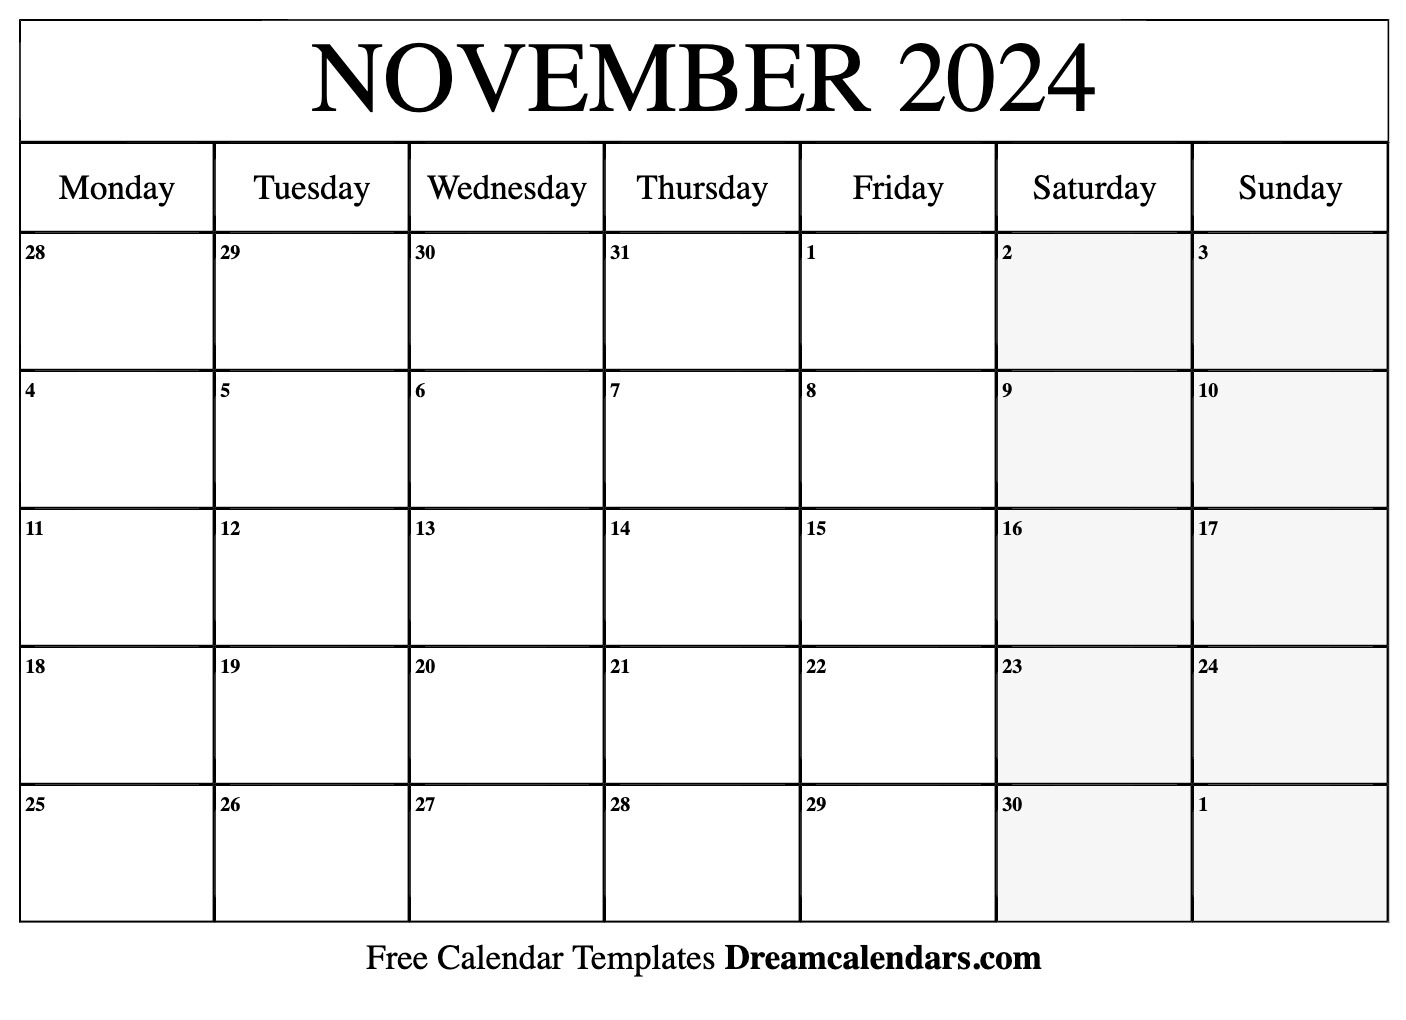 November 2024 Calendar | Free Blank Printable With Holidays | November 2024 Calendar Printable Free